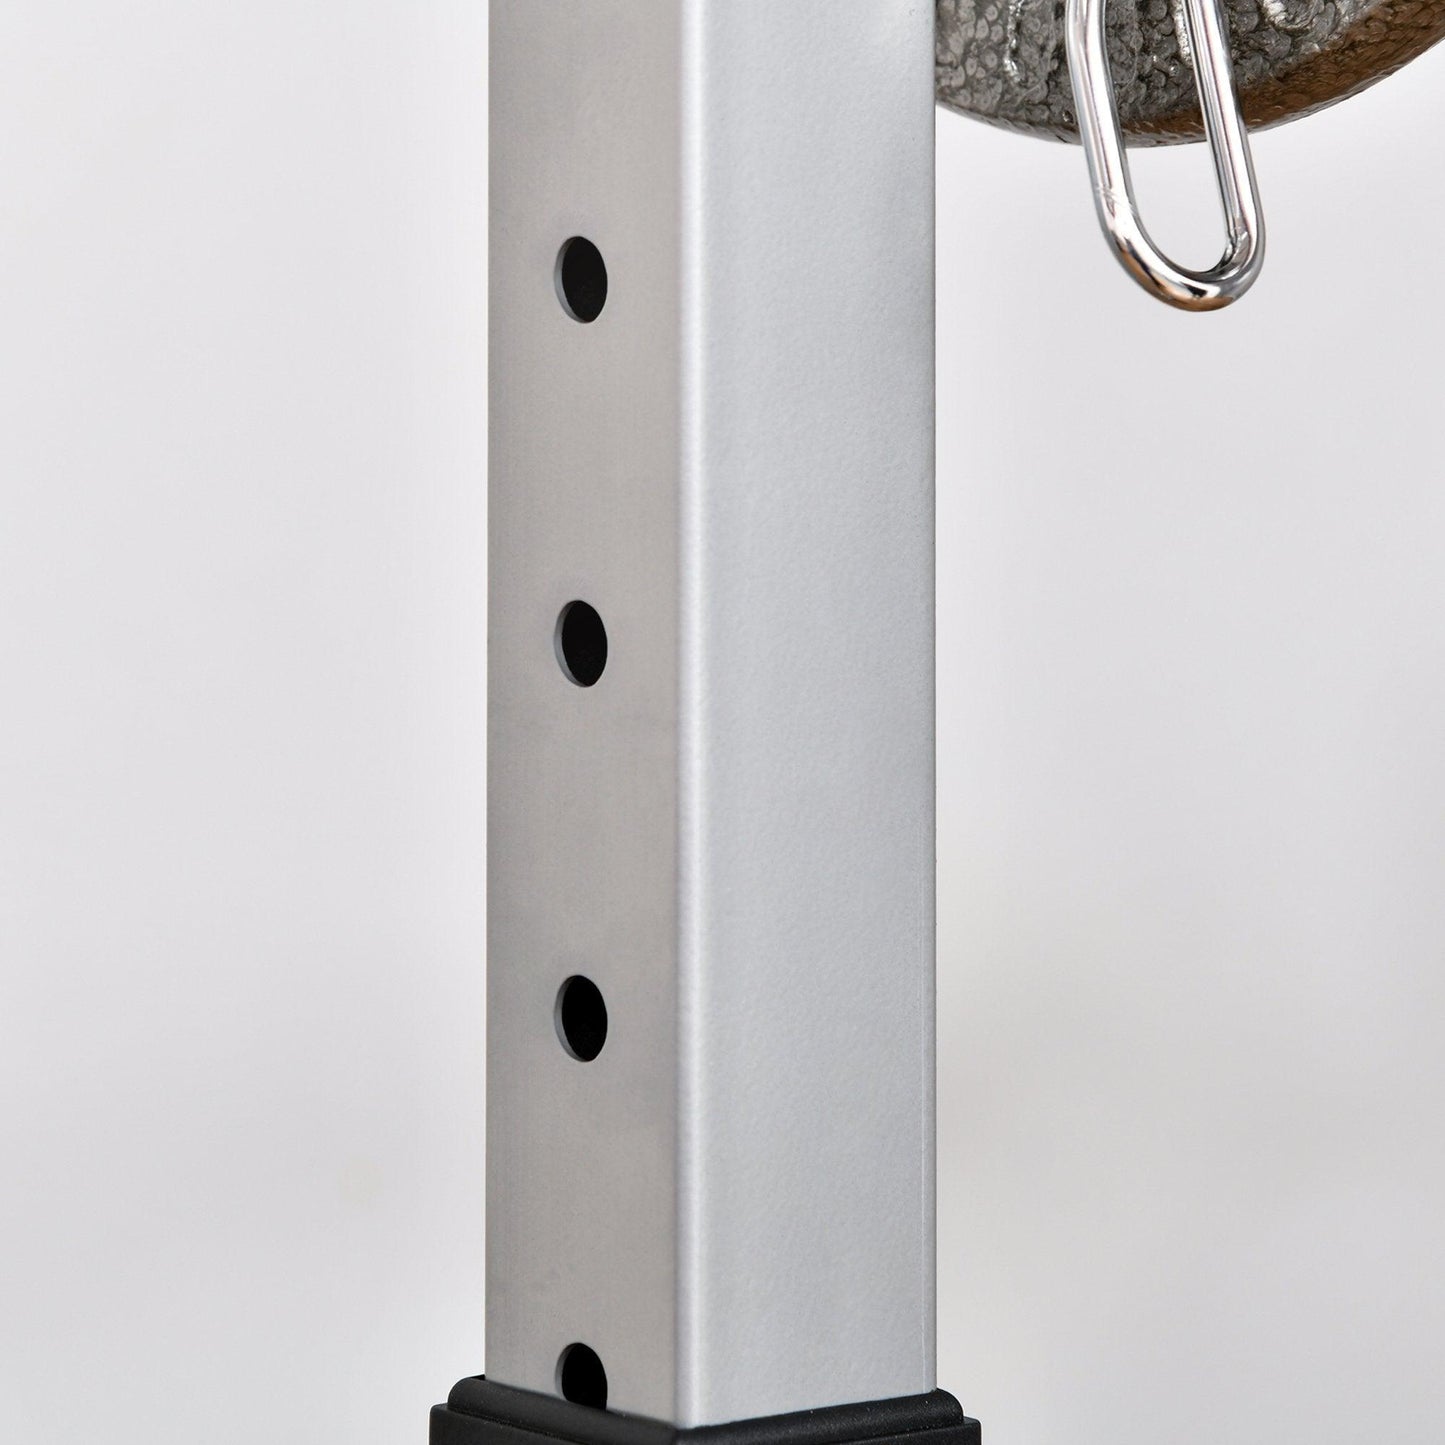 HOMCOM Portable Barbell Squat Rack - Adjustable & Easy-to-use - ALL4U RETAILER LTD